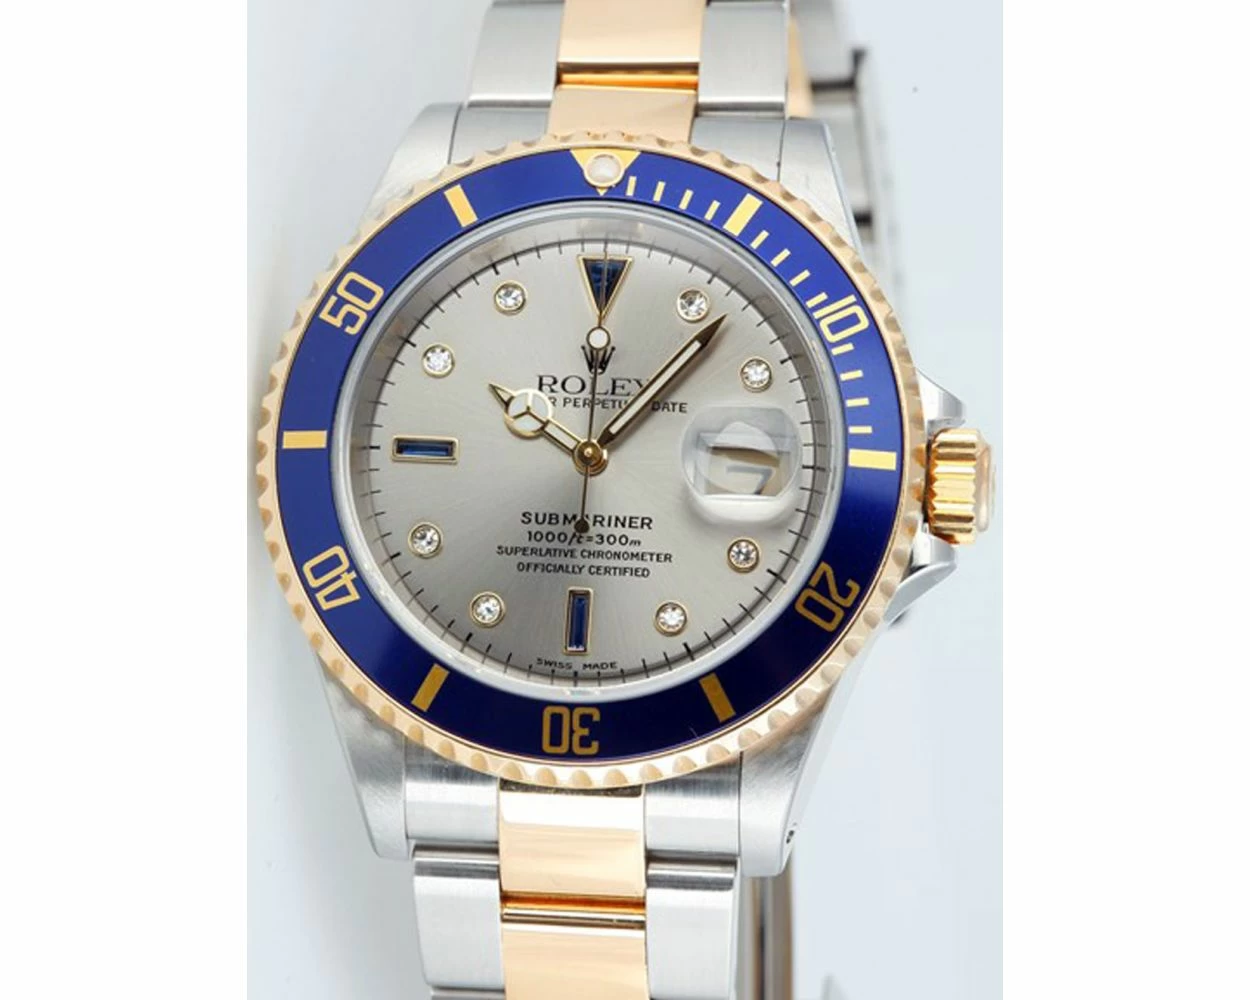 Rolex Submariner Blue Mens Watch 16613LB